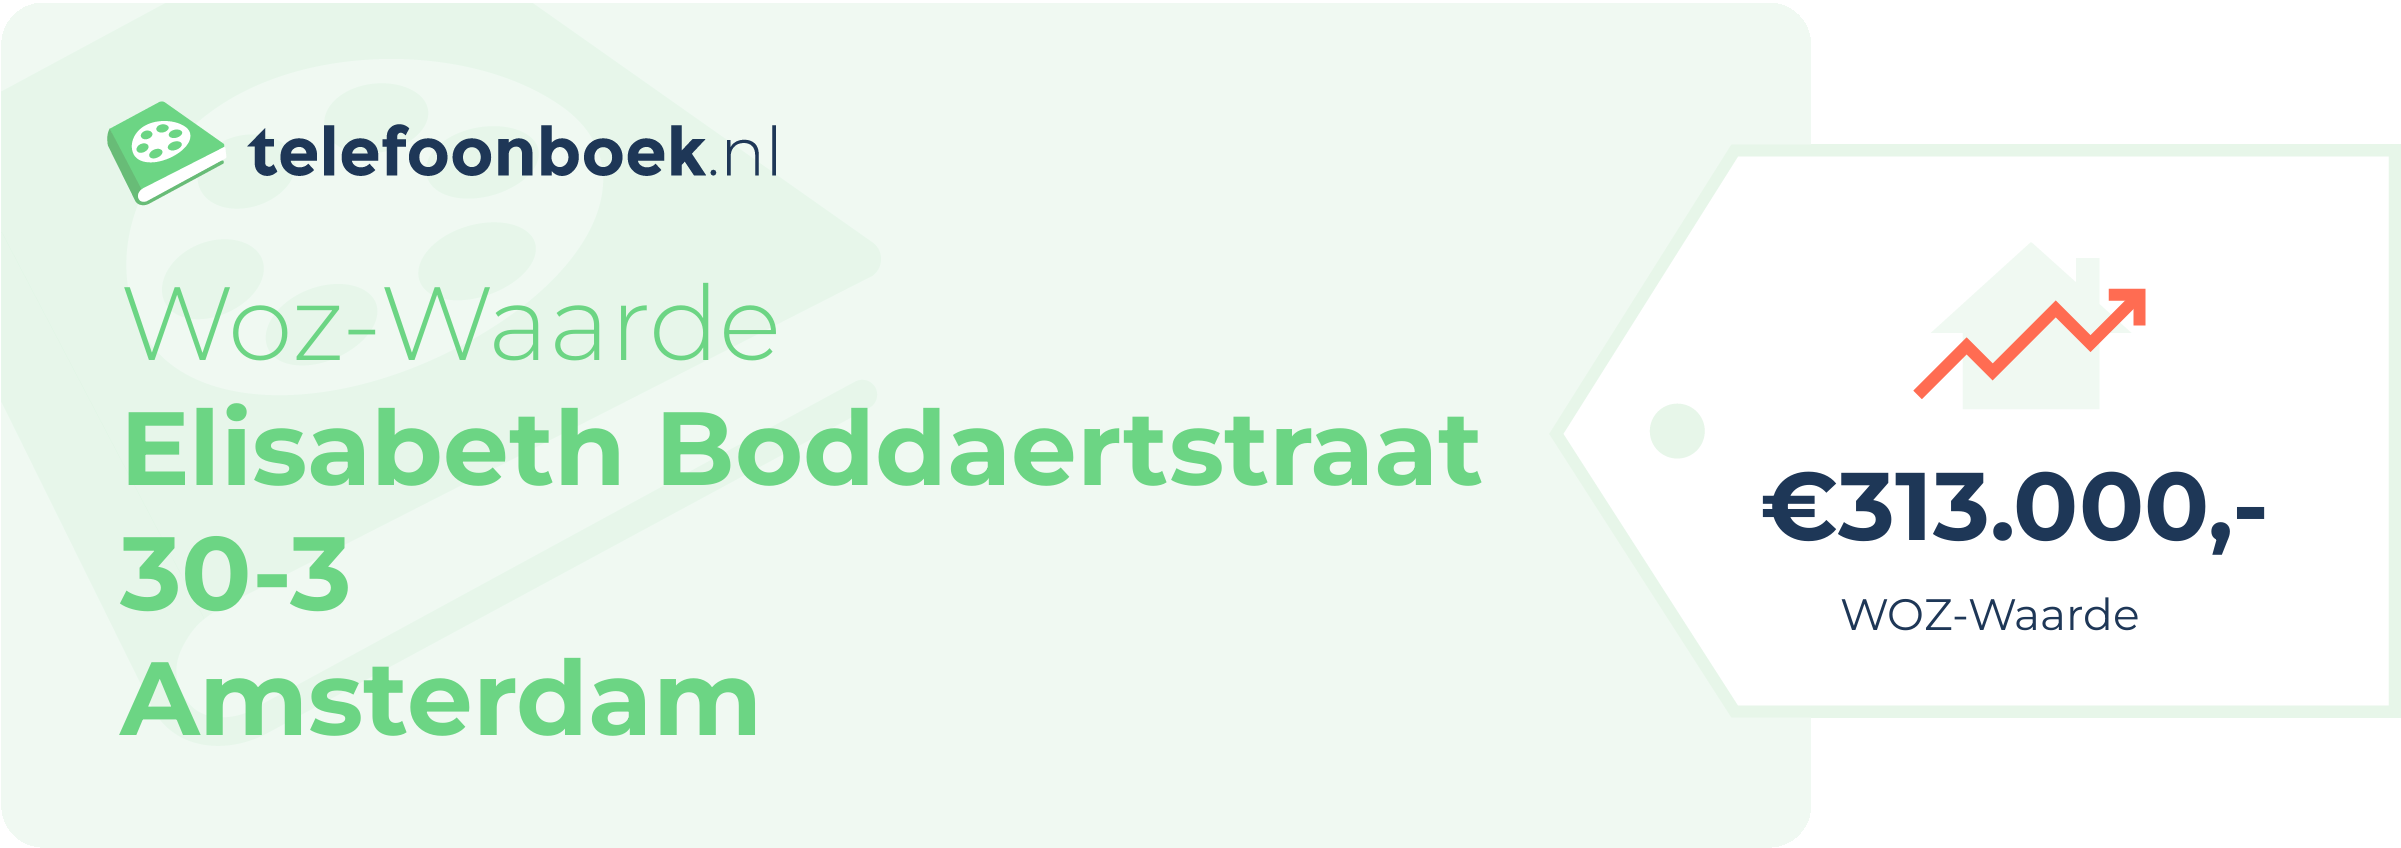 WOZ-waarde Elisabeth Boddaertstraat 30-3 Amsterdam